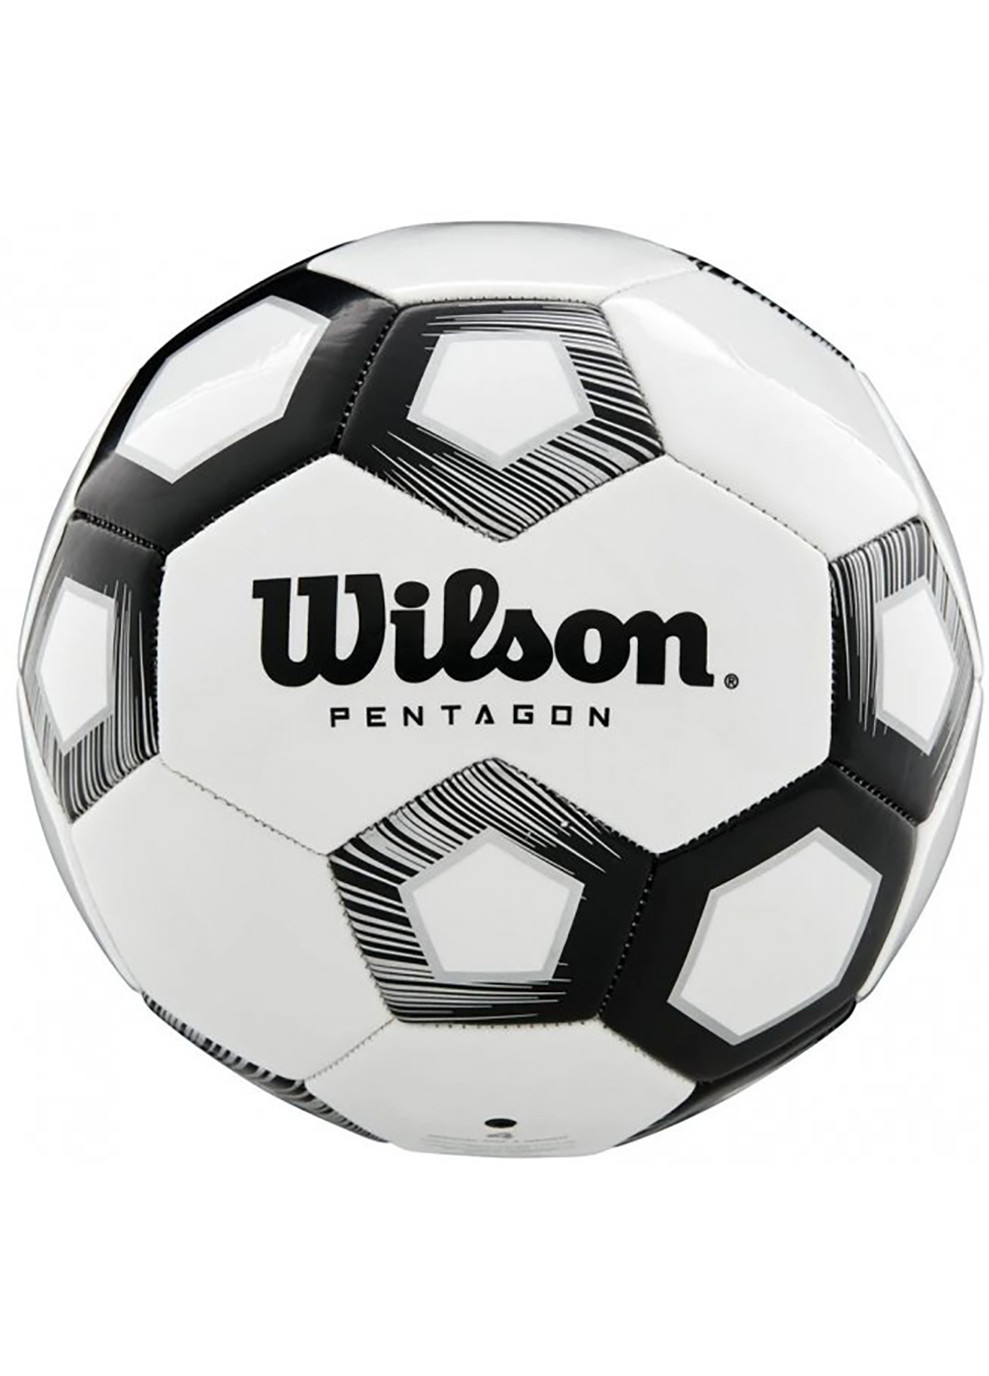 М'яч футбольний Pentagon white/black size 5 Wilson (259296312)